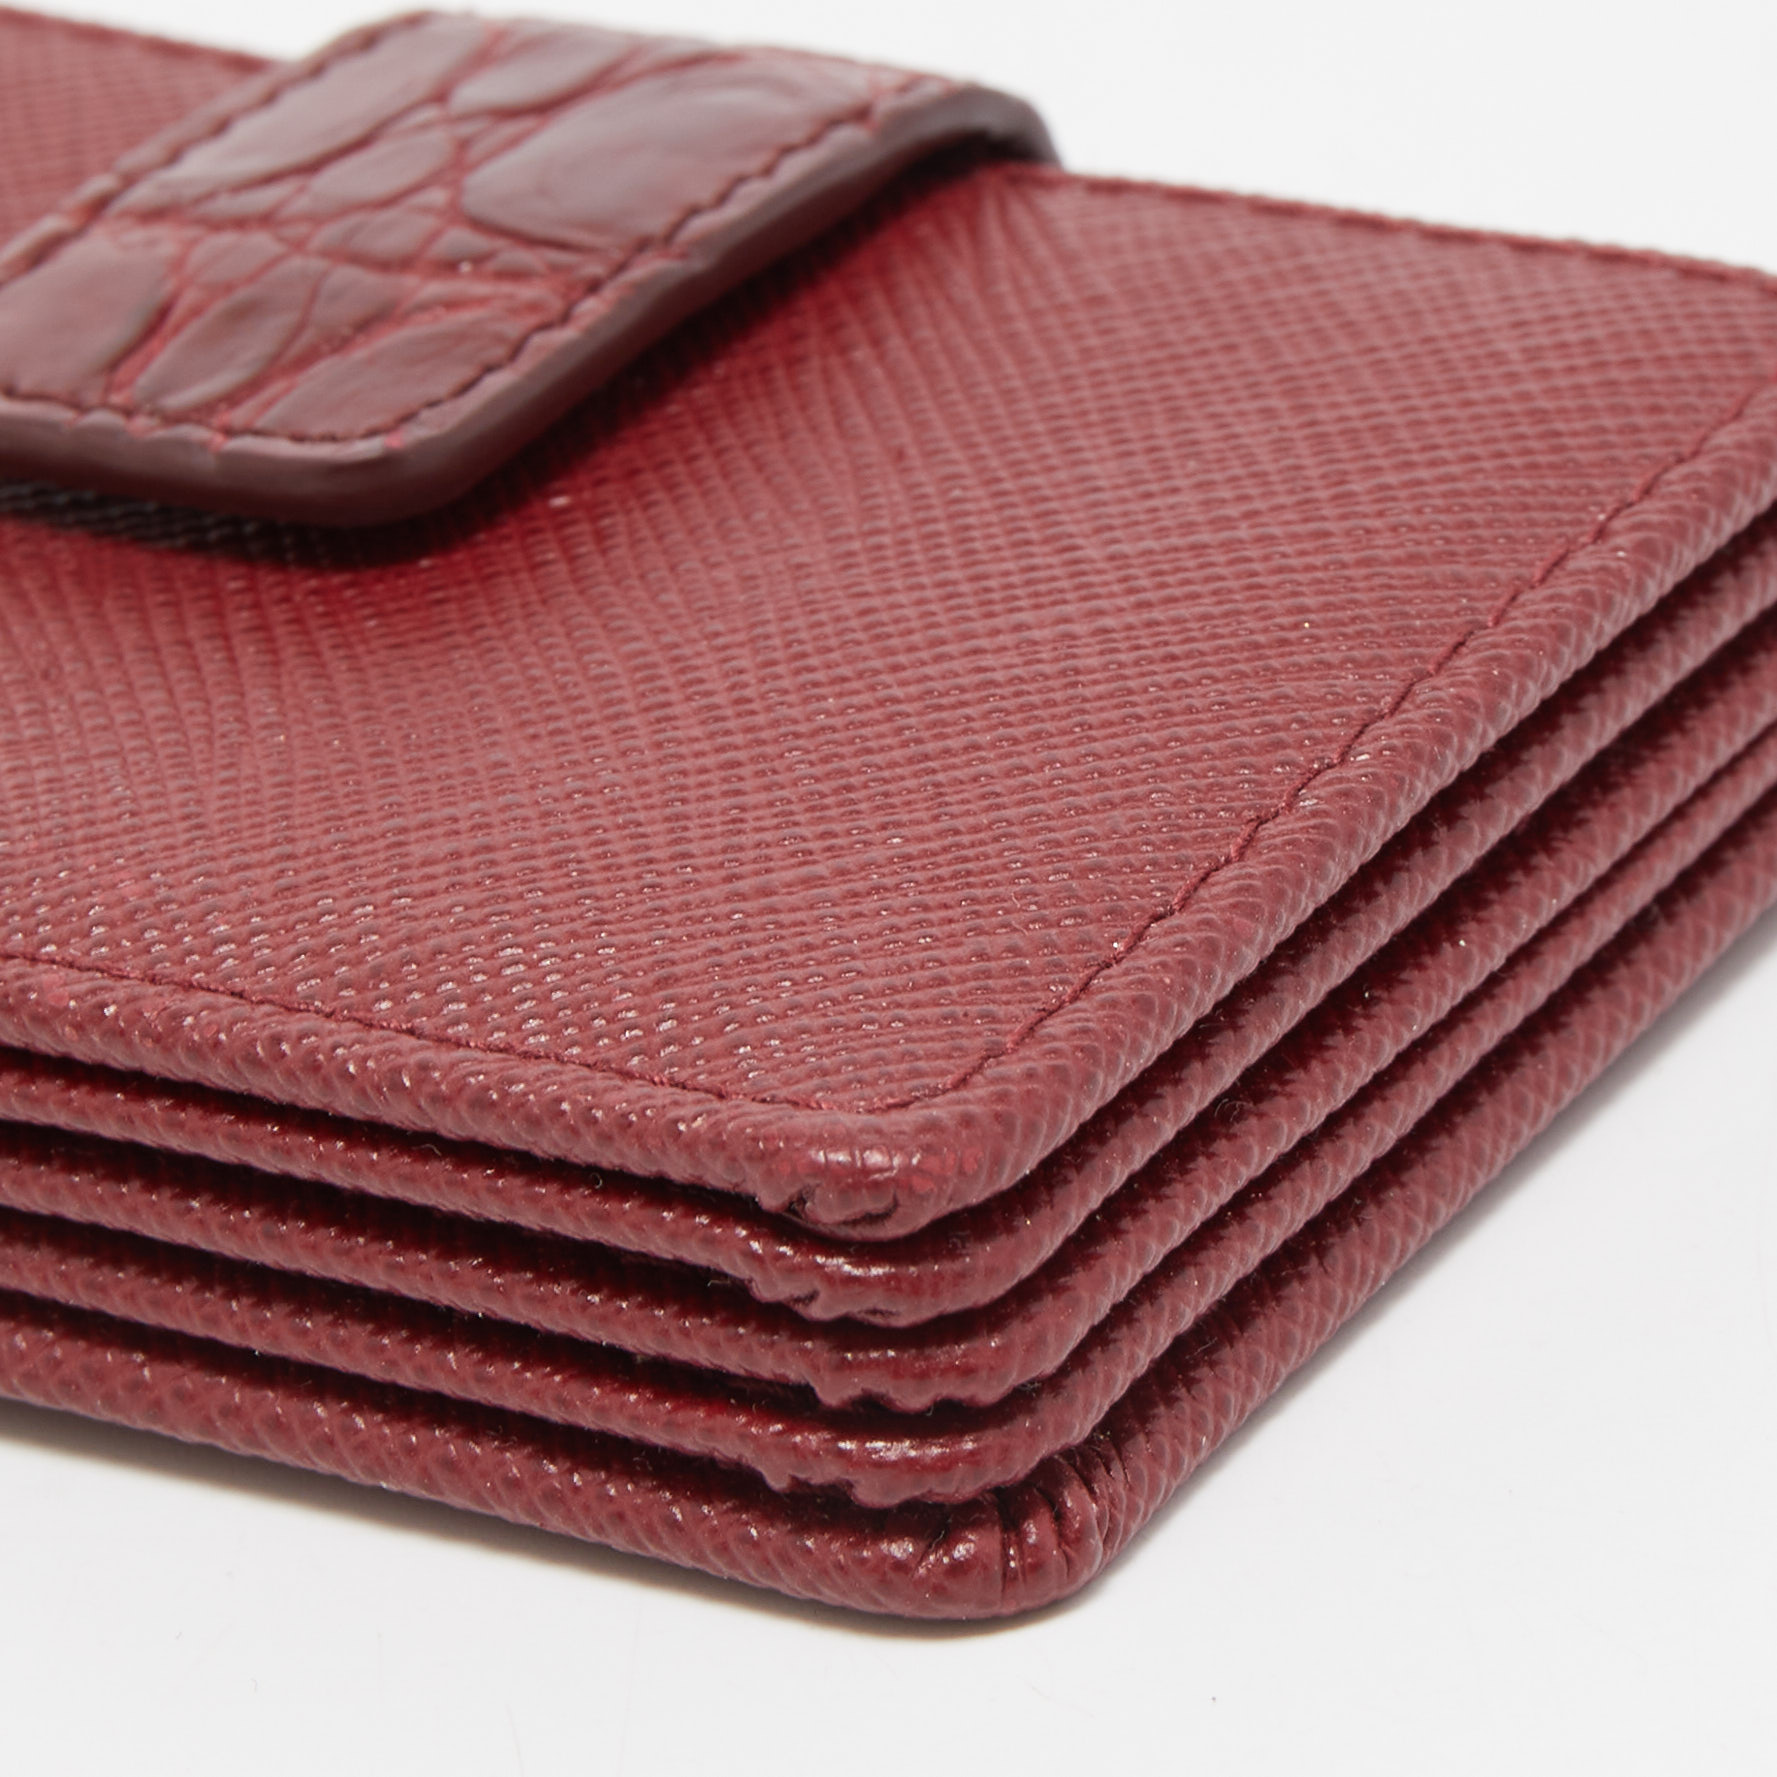 Prada Burgundy Saffiano Leather And Croccodile 5 Gussets Card Case